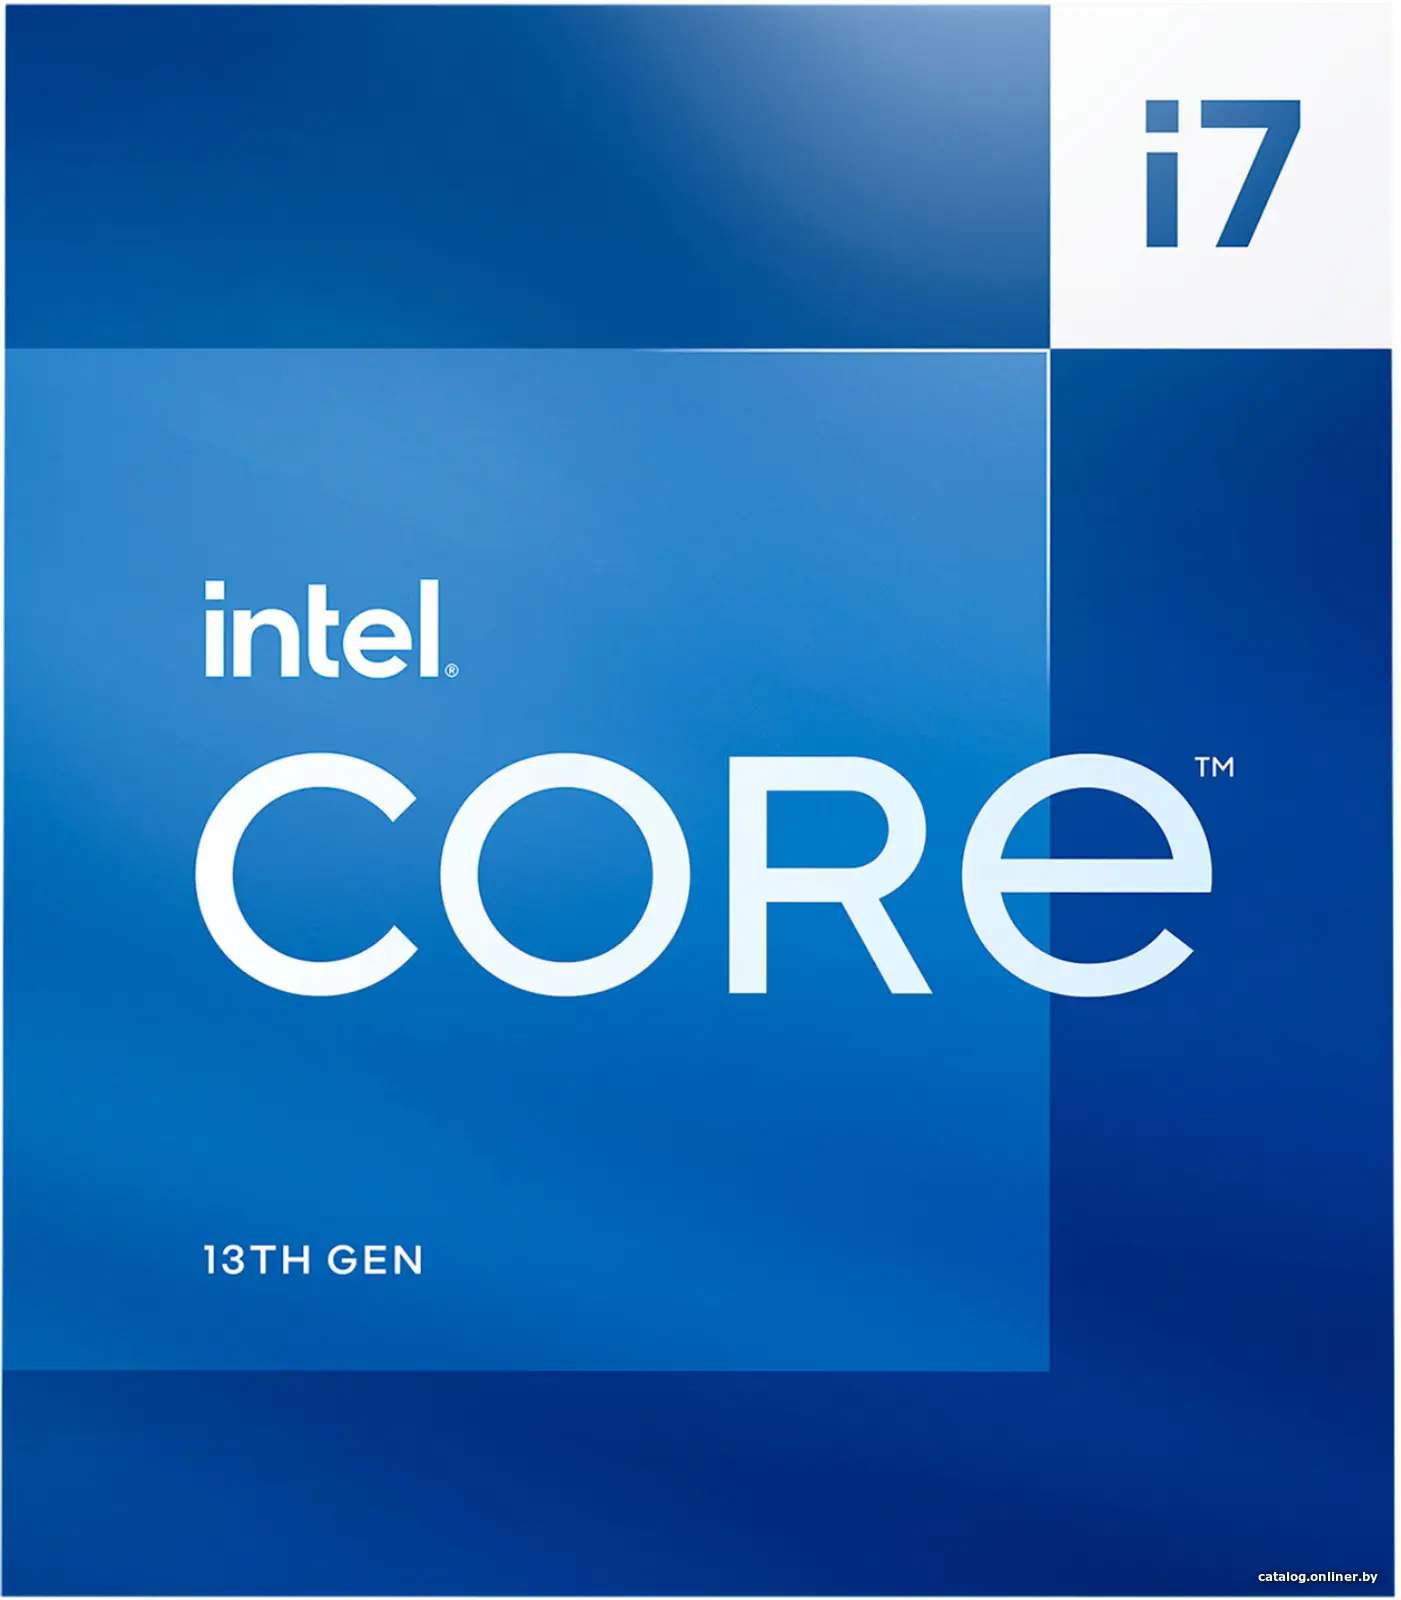 Купить Процессор Intel Core i7-13700F OEM, цена, опт и розница